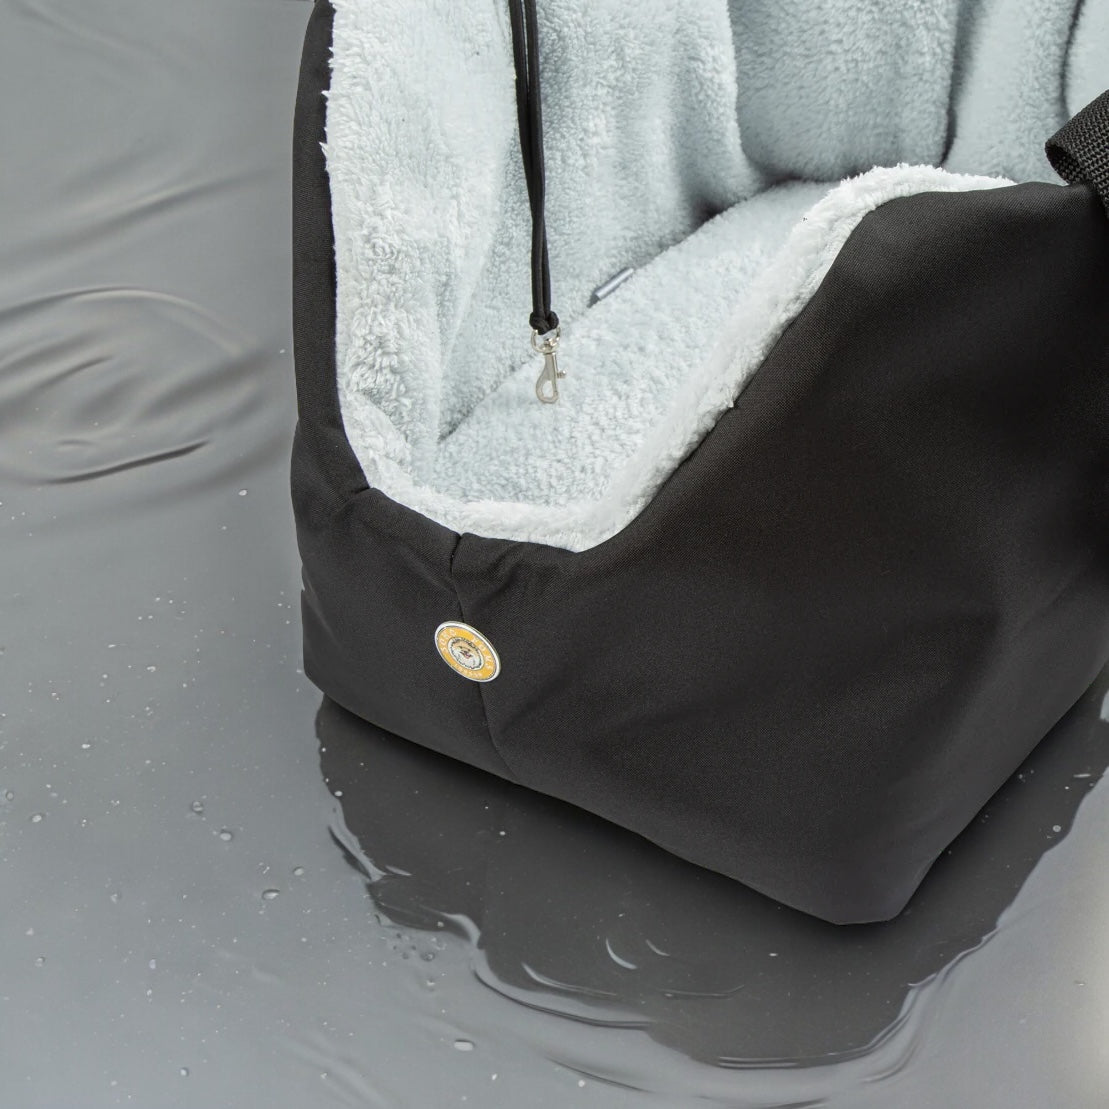 Dog Carrier Bag Rainy Bear Black and Light Blue by SohoPoms